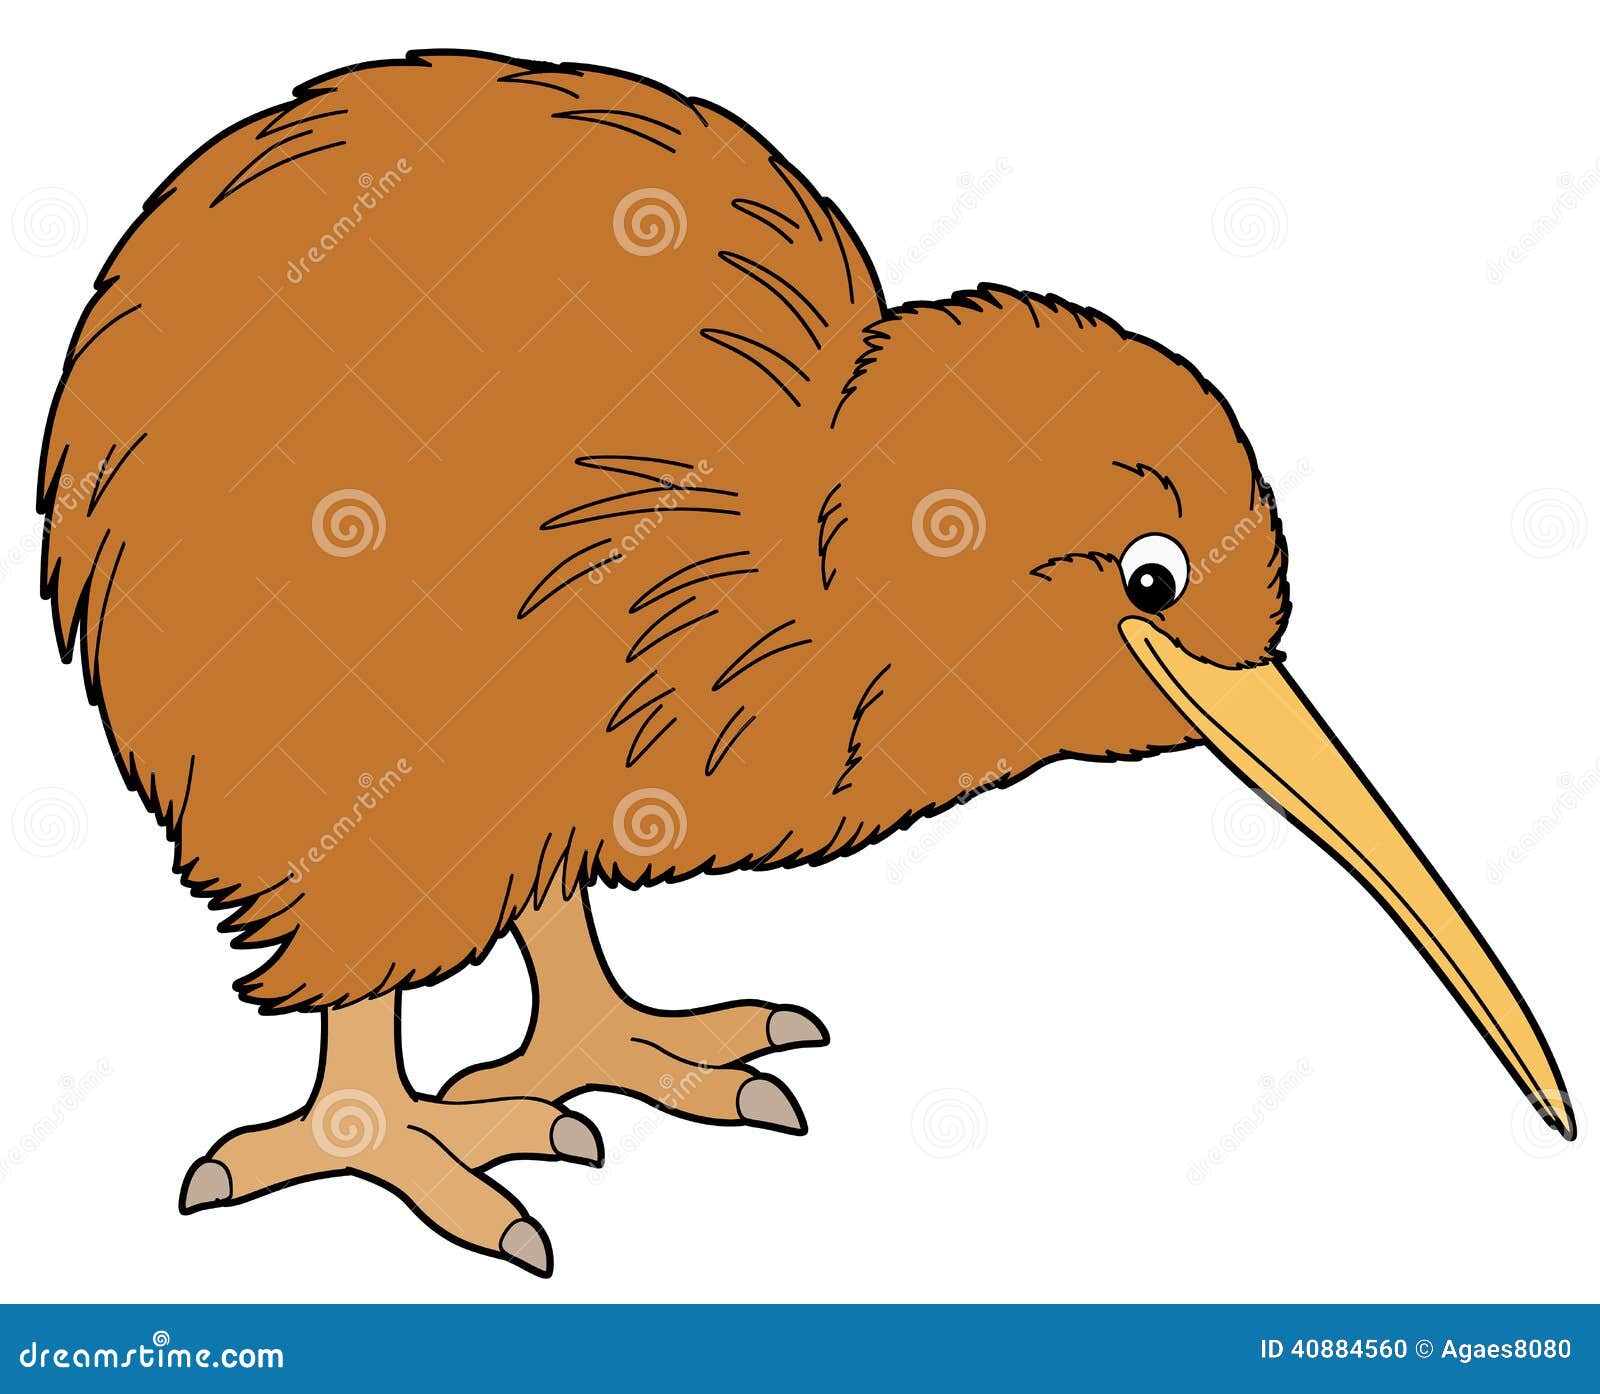 Cartoon Animal - Kiwi - Flat Coloring Style - Illustration for the Children  Stock Illustration - Illustration of small, white: 40884560